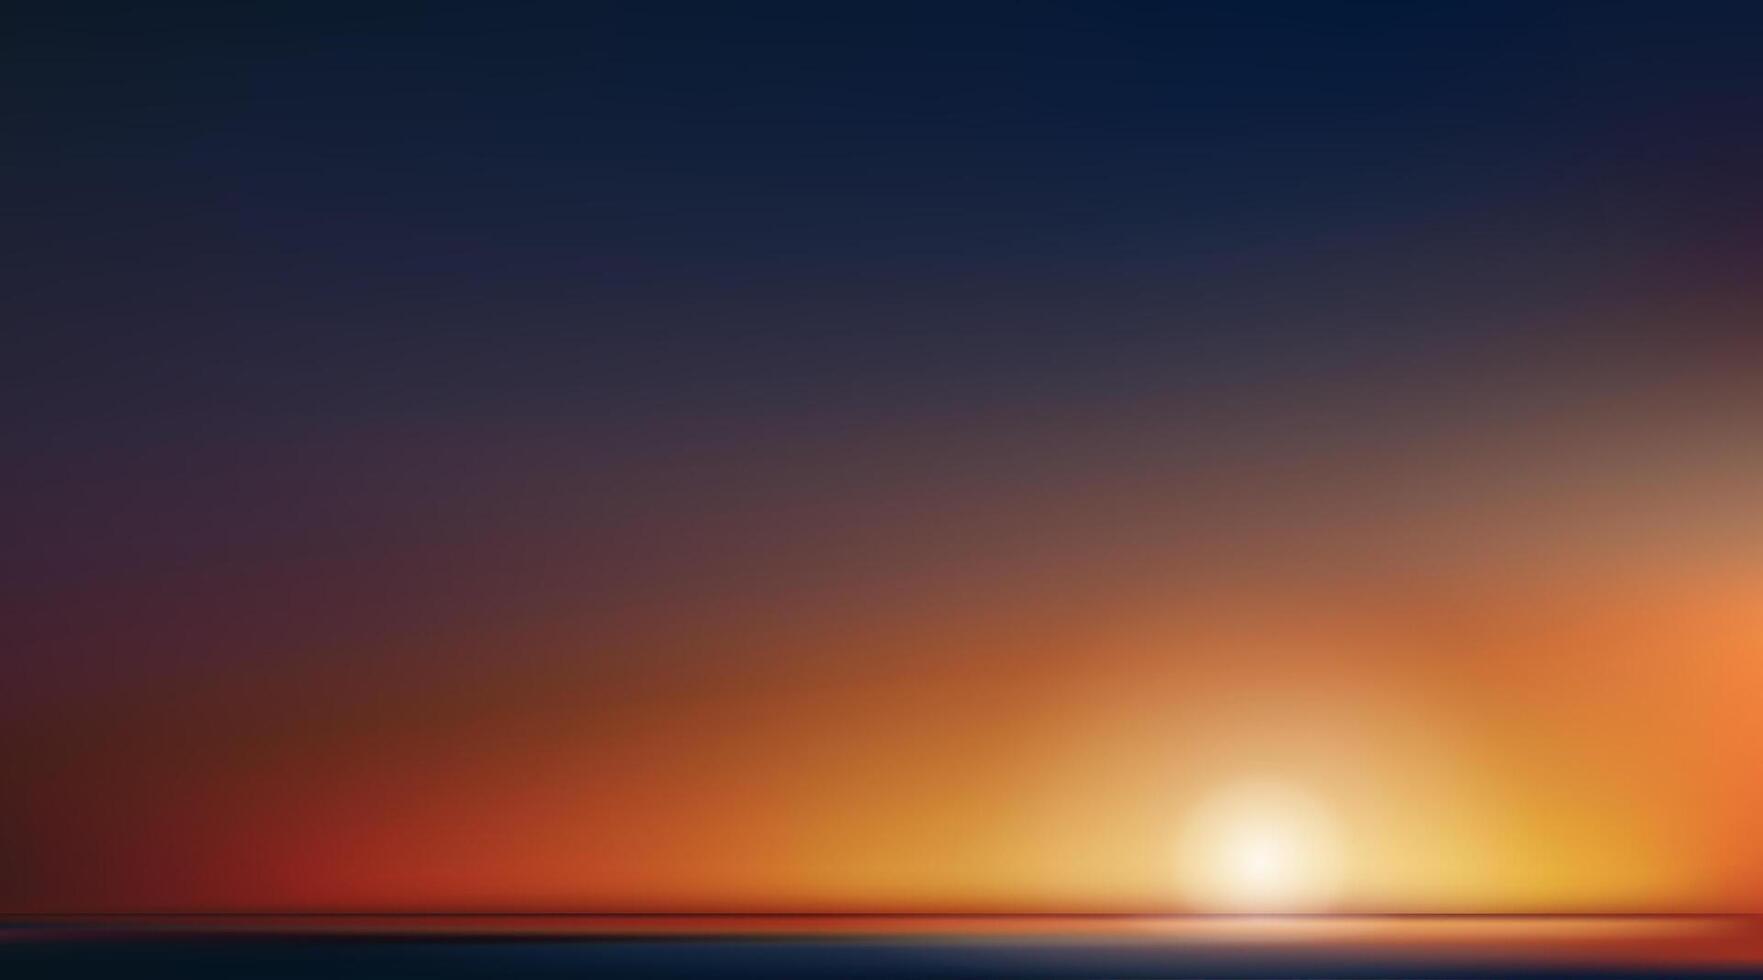 zonsondergang lucht achtergrond, avond hemel, wolk over- strand in zomer, vector illustratie panoramisch landschap schemering schemer hemel, spandoek natuur zon met zonsopkomst in geel oranje lucht in ochtend- voorjaar